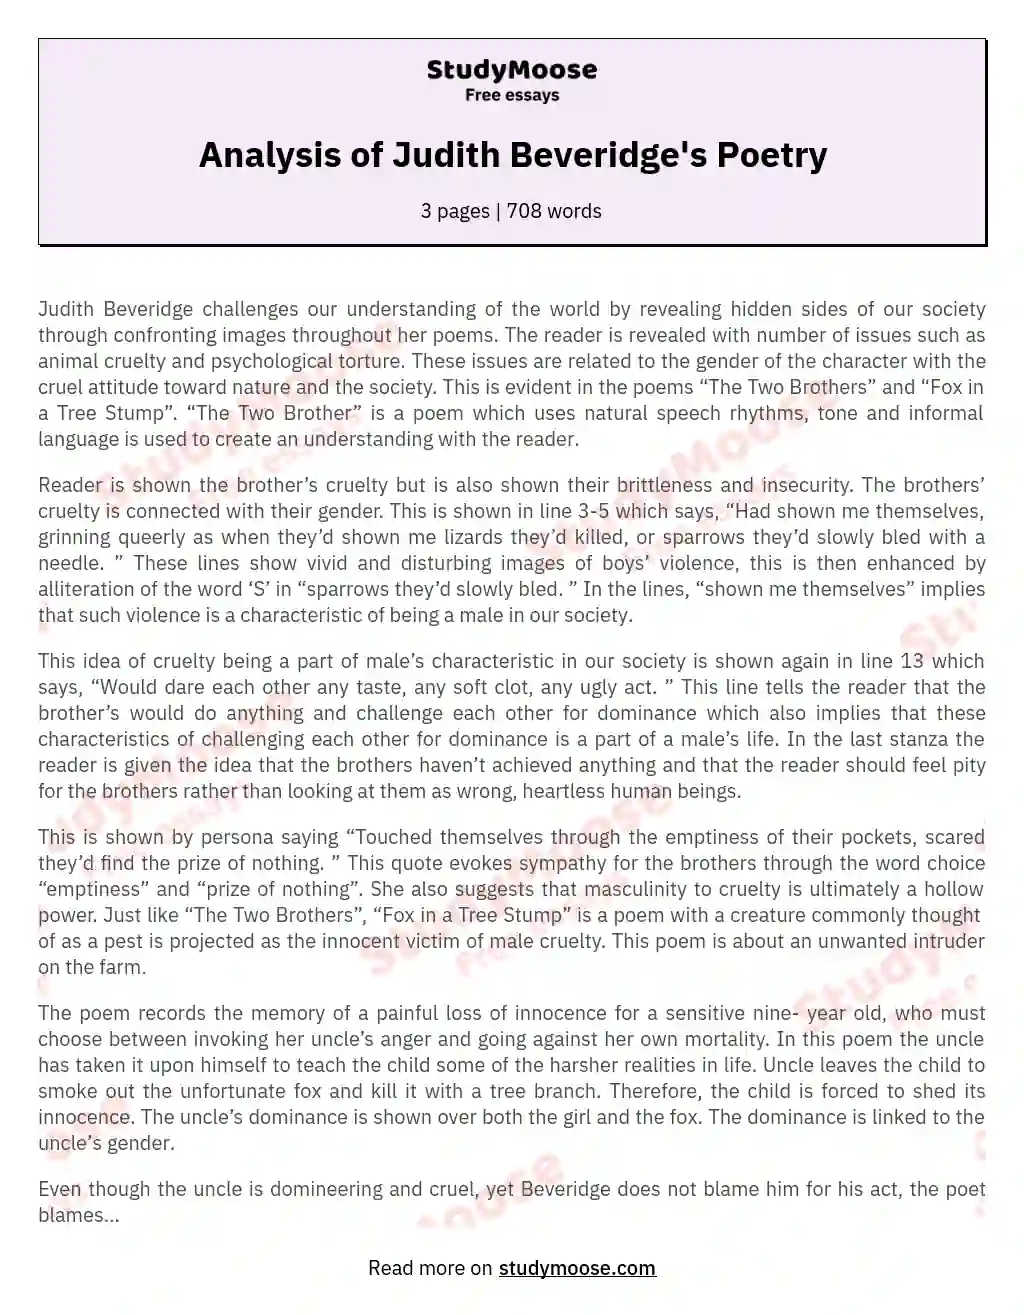 Analysis of Judith Beveridge's Poetry essay